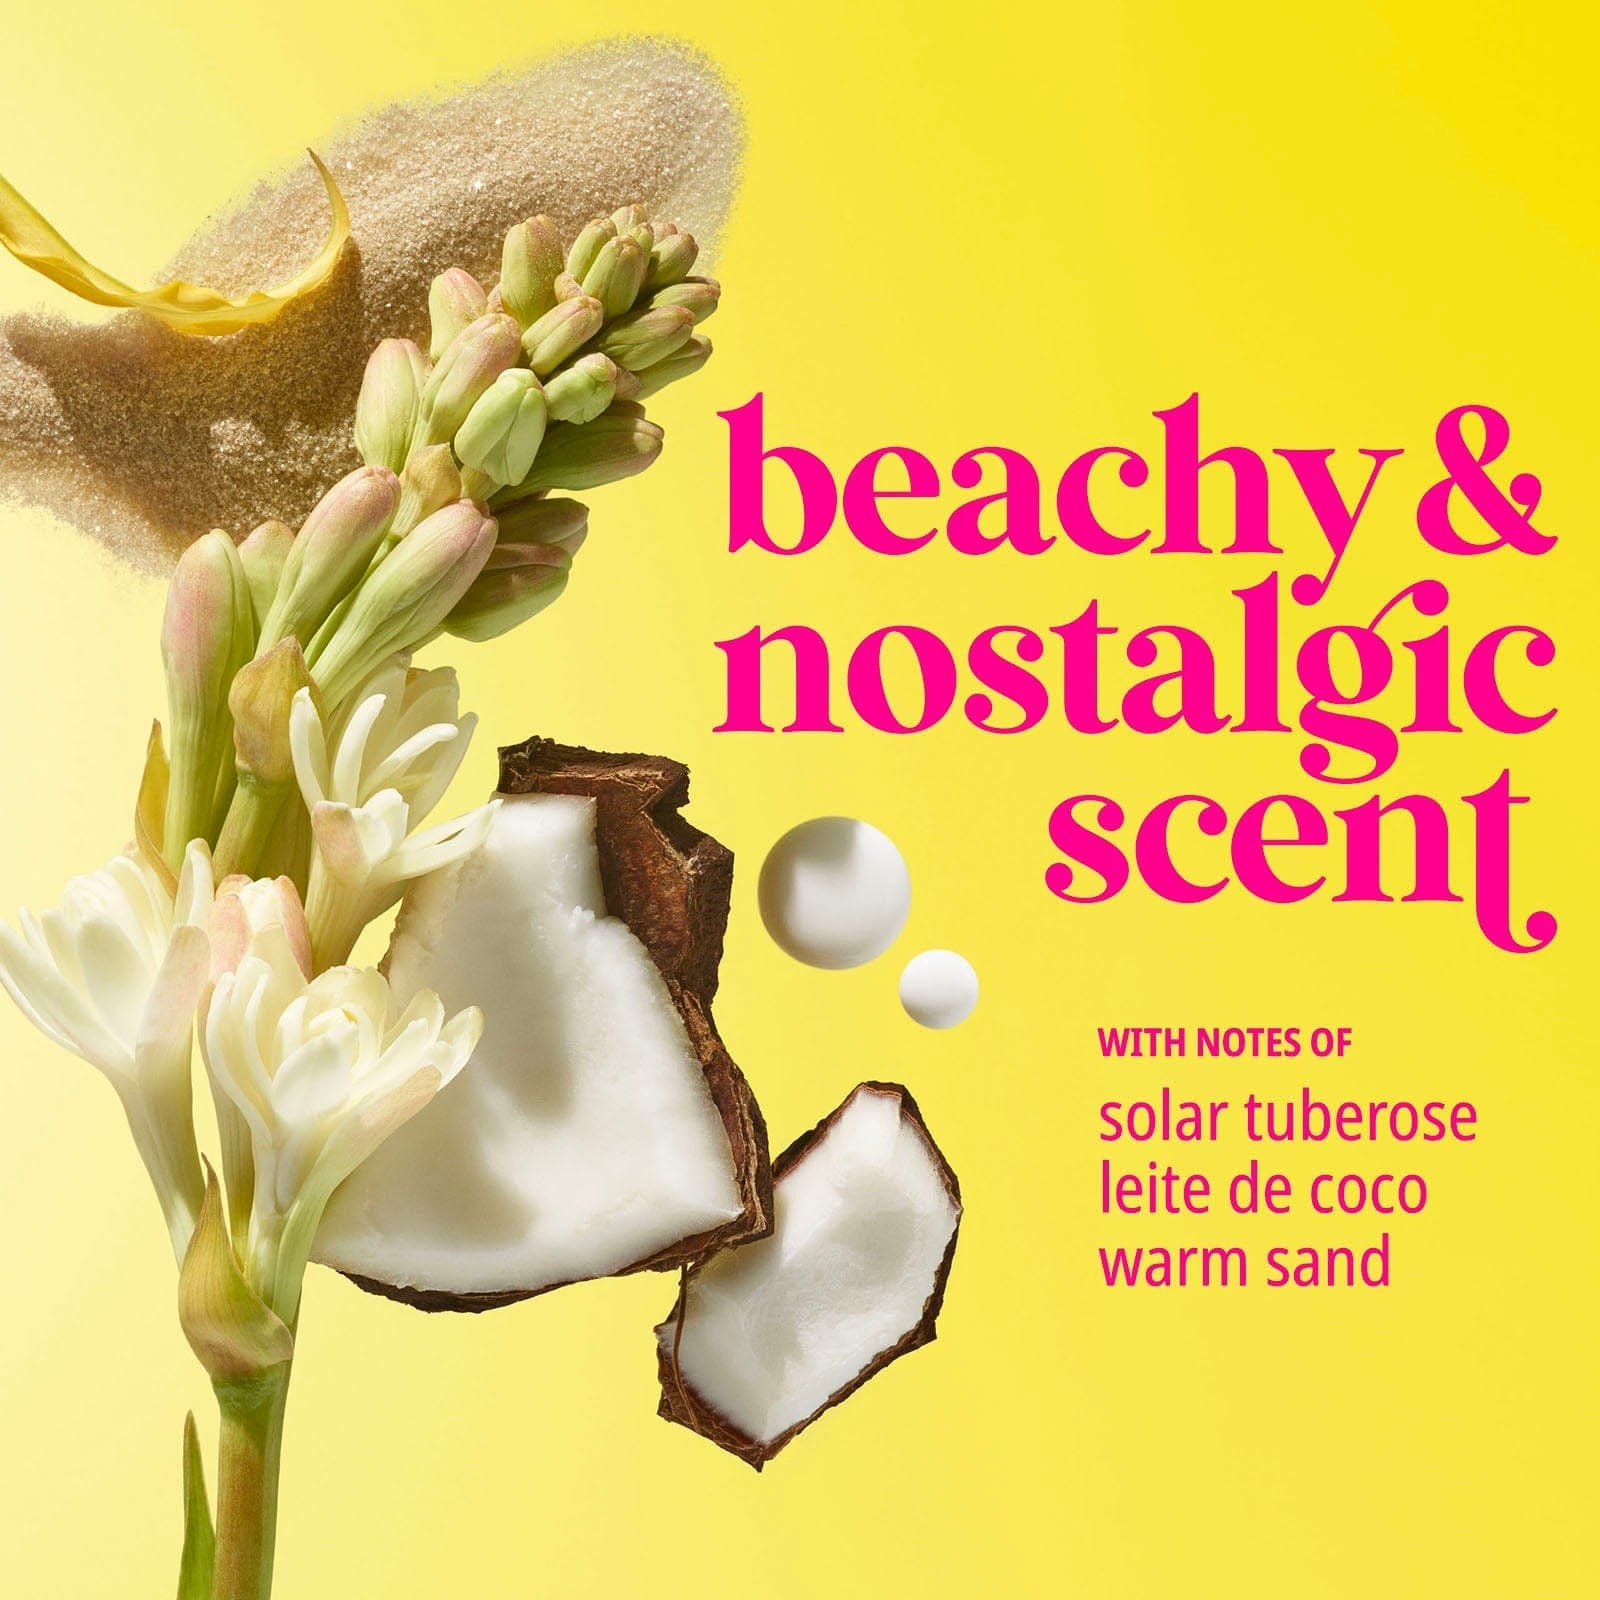 Beachy &amp; nostalgic scent, with notes of solar tuberose, leite de coco, warm sand